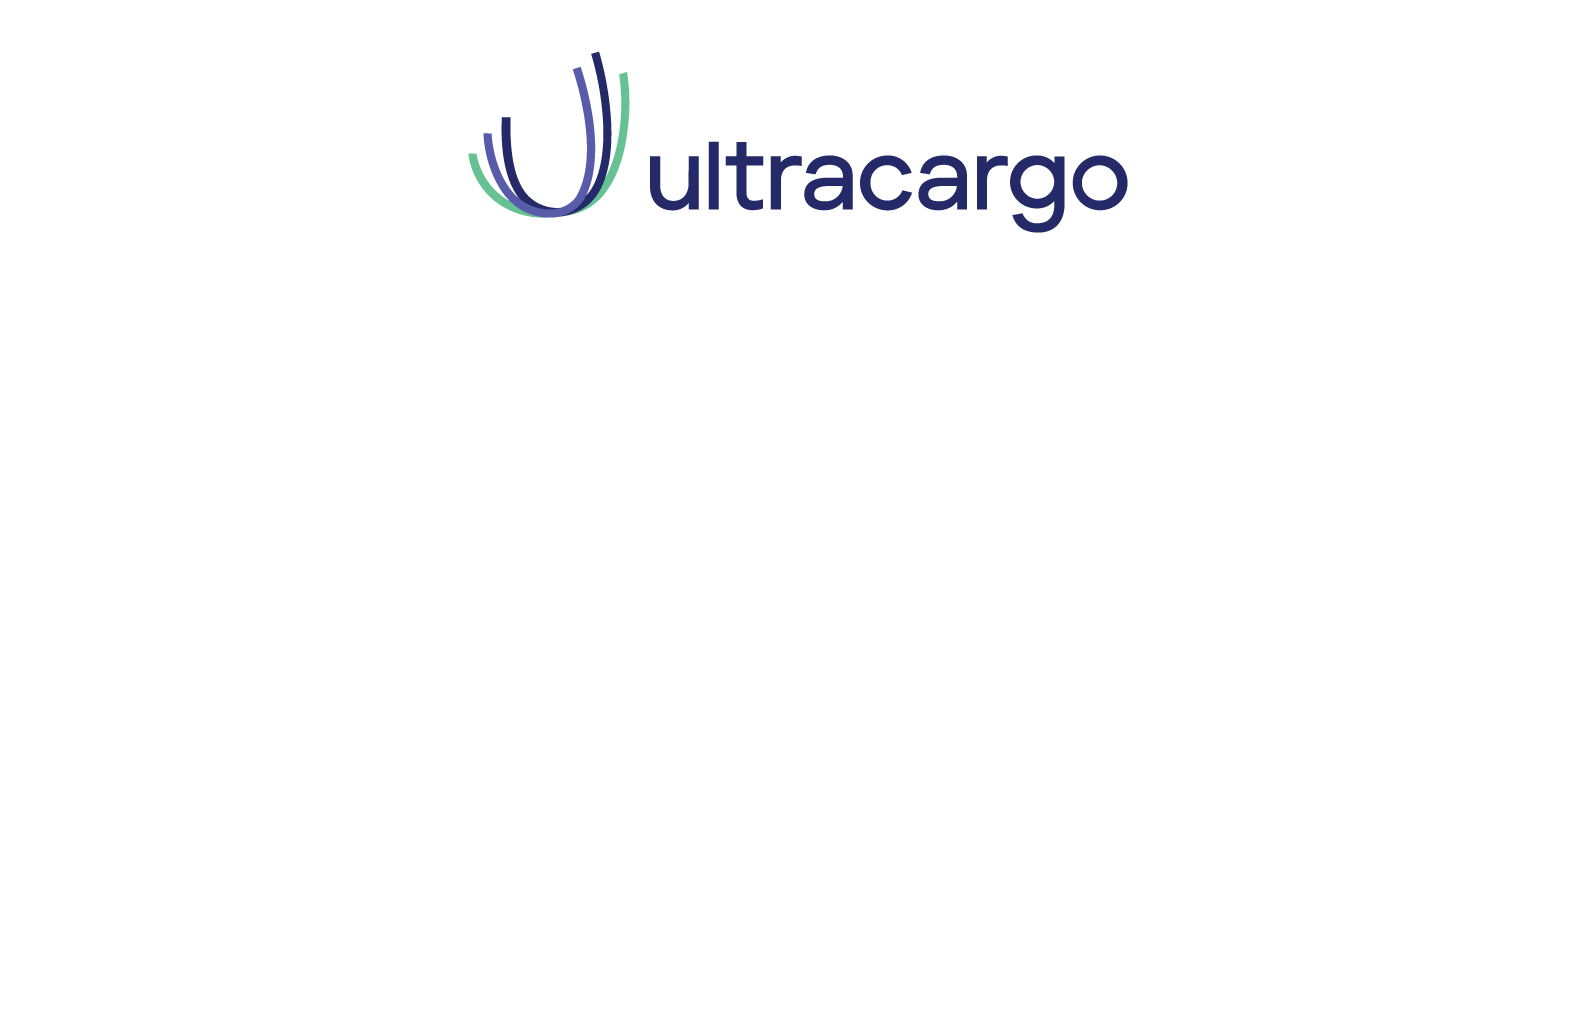 Ultracargo